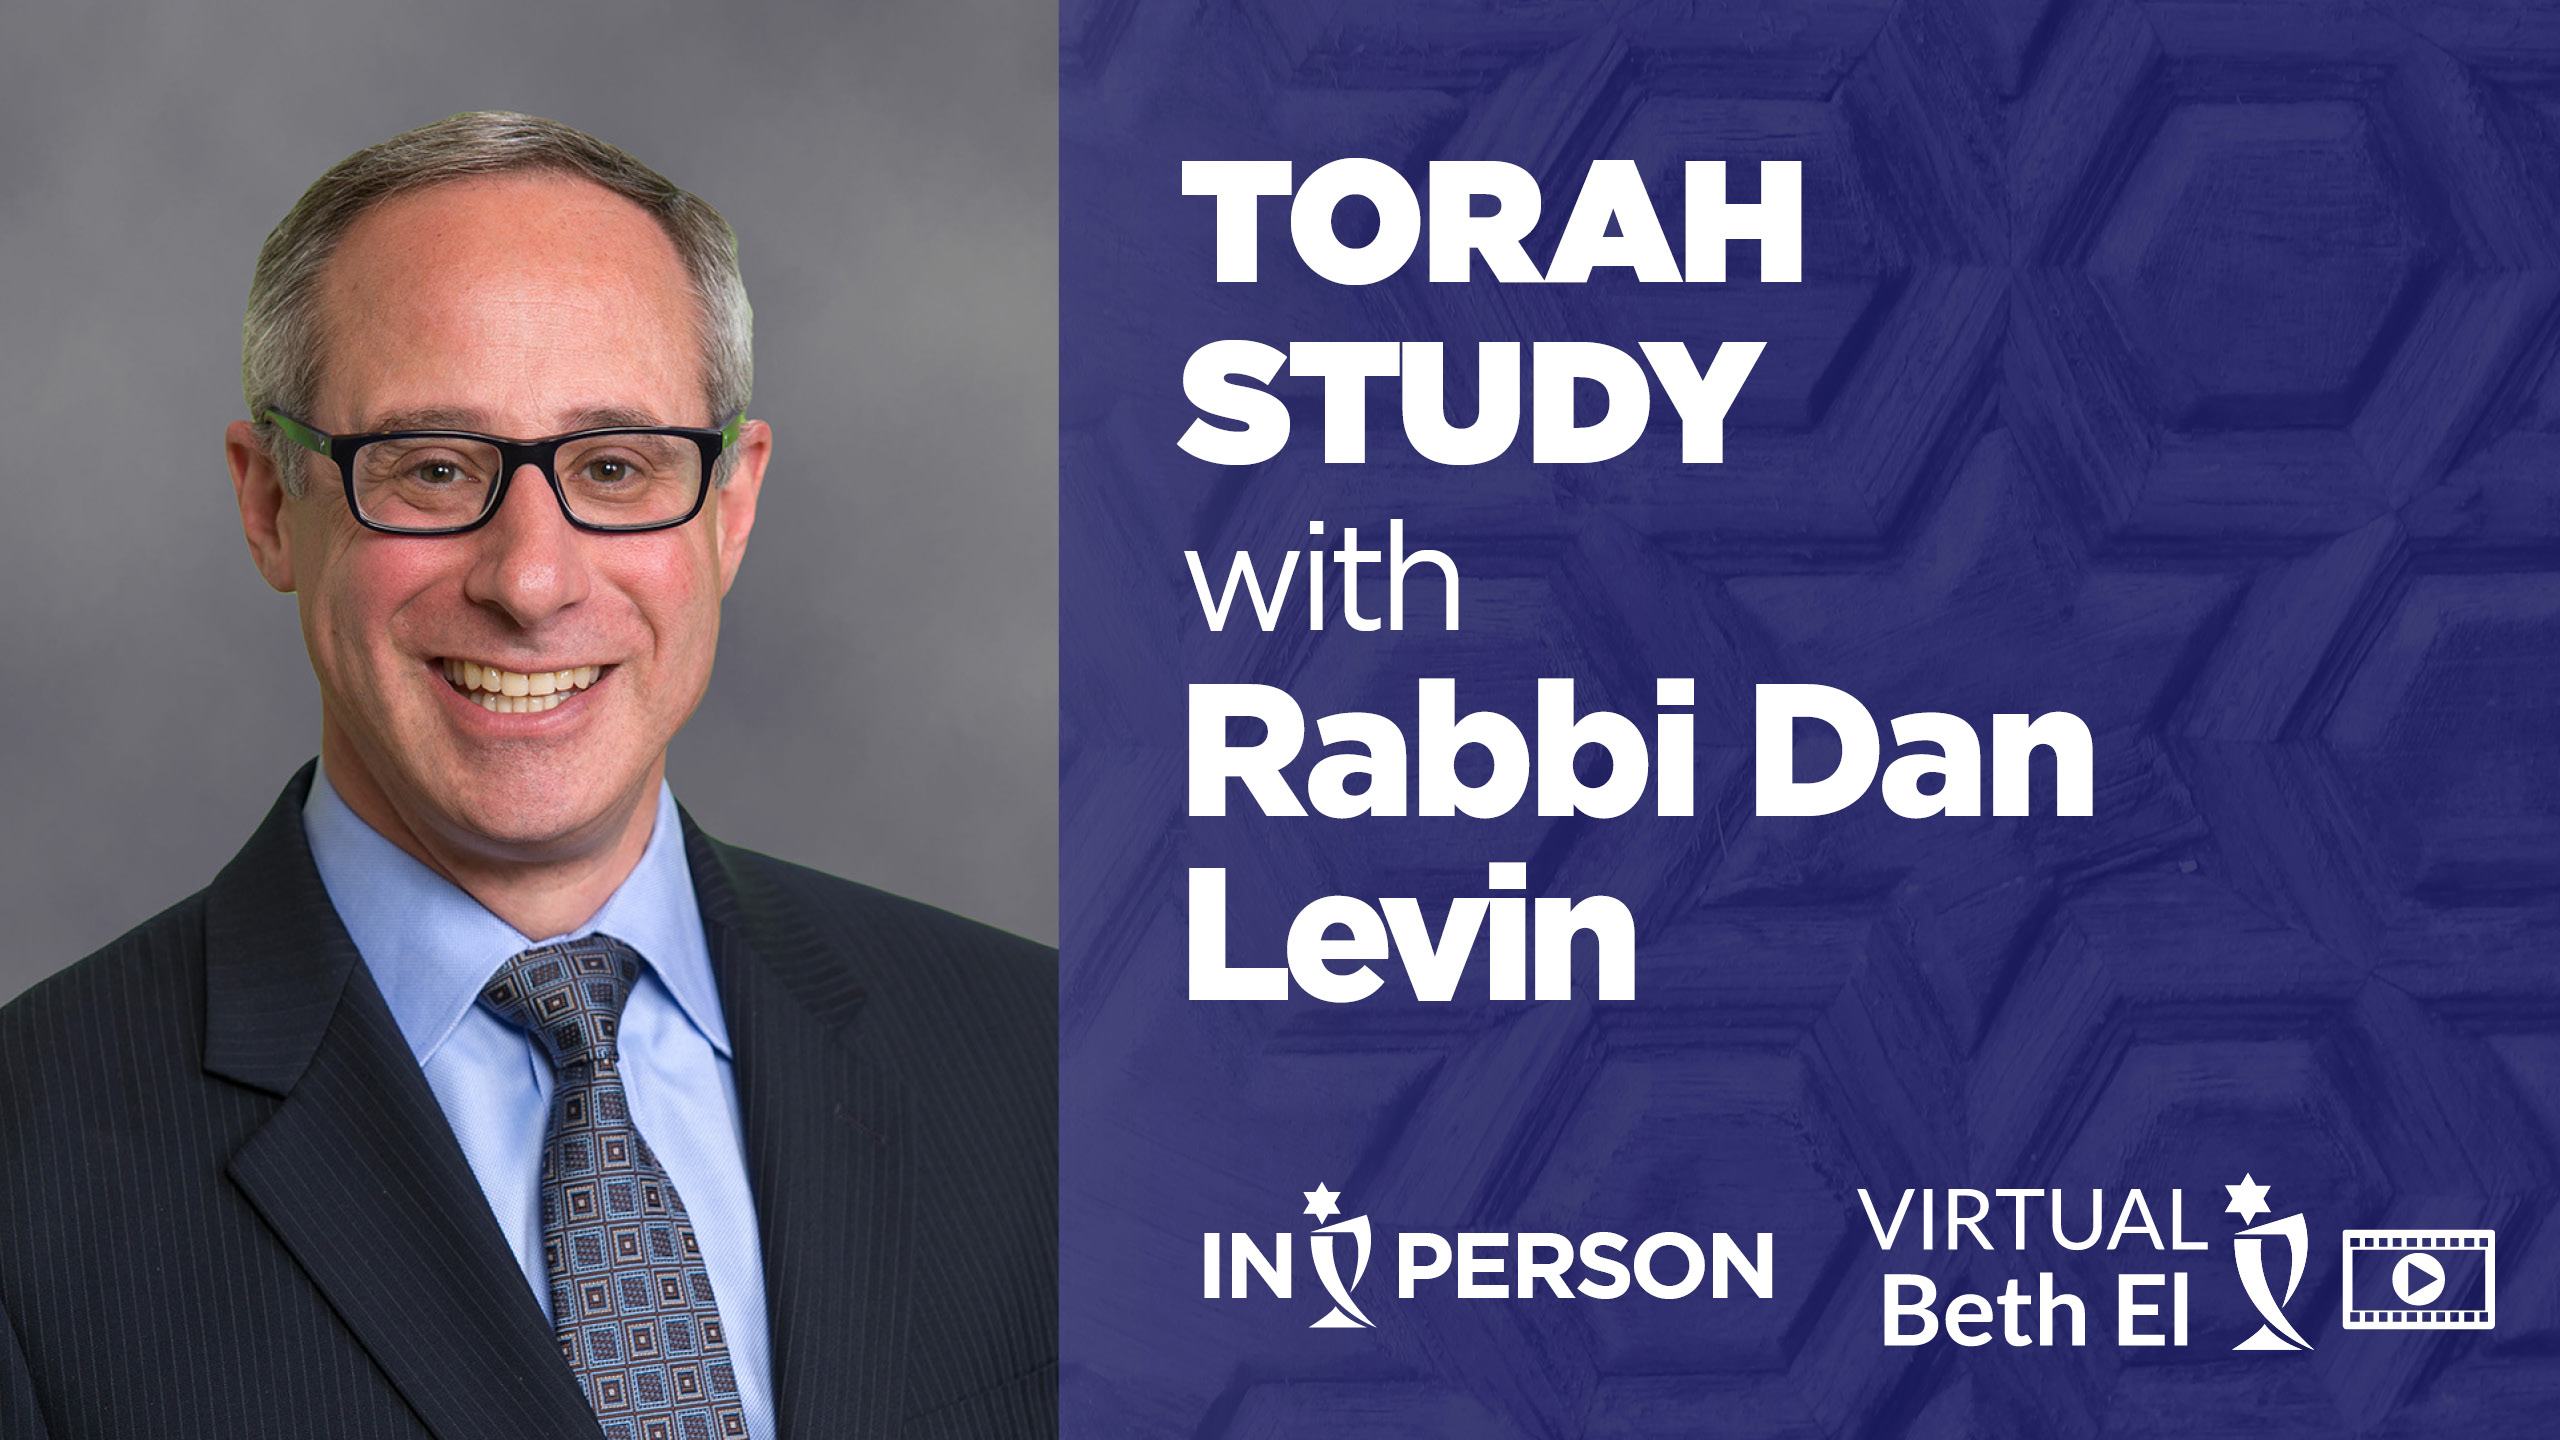 Torah Study with Rabbi Dan Levin event graphic for Temple Beth El of Boca Raton